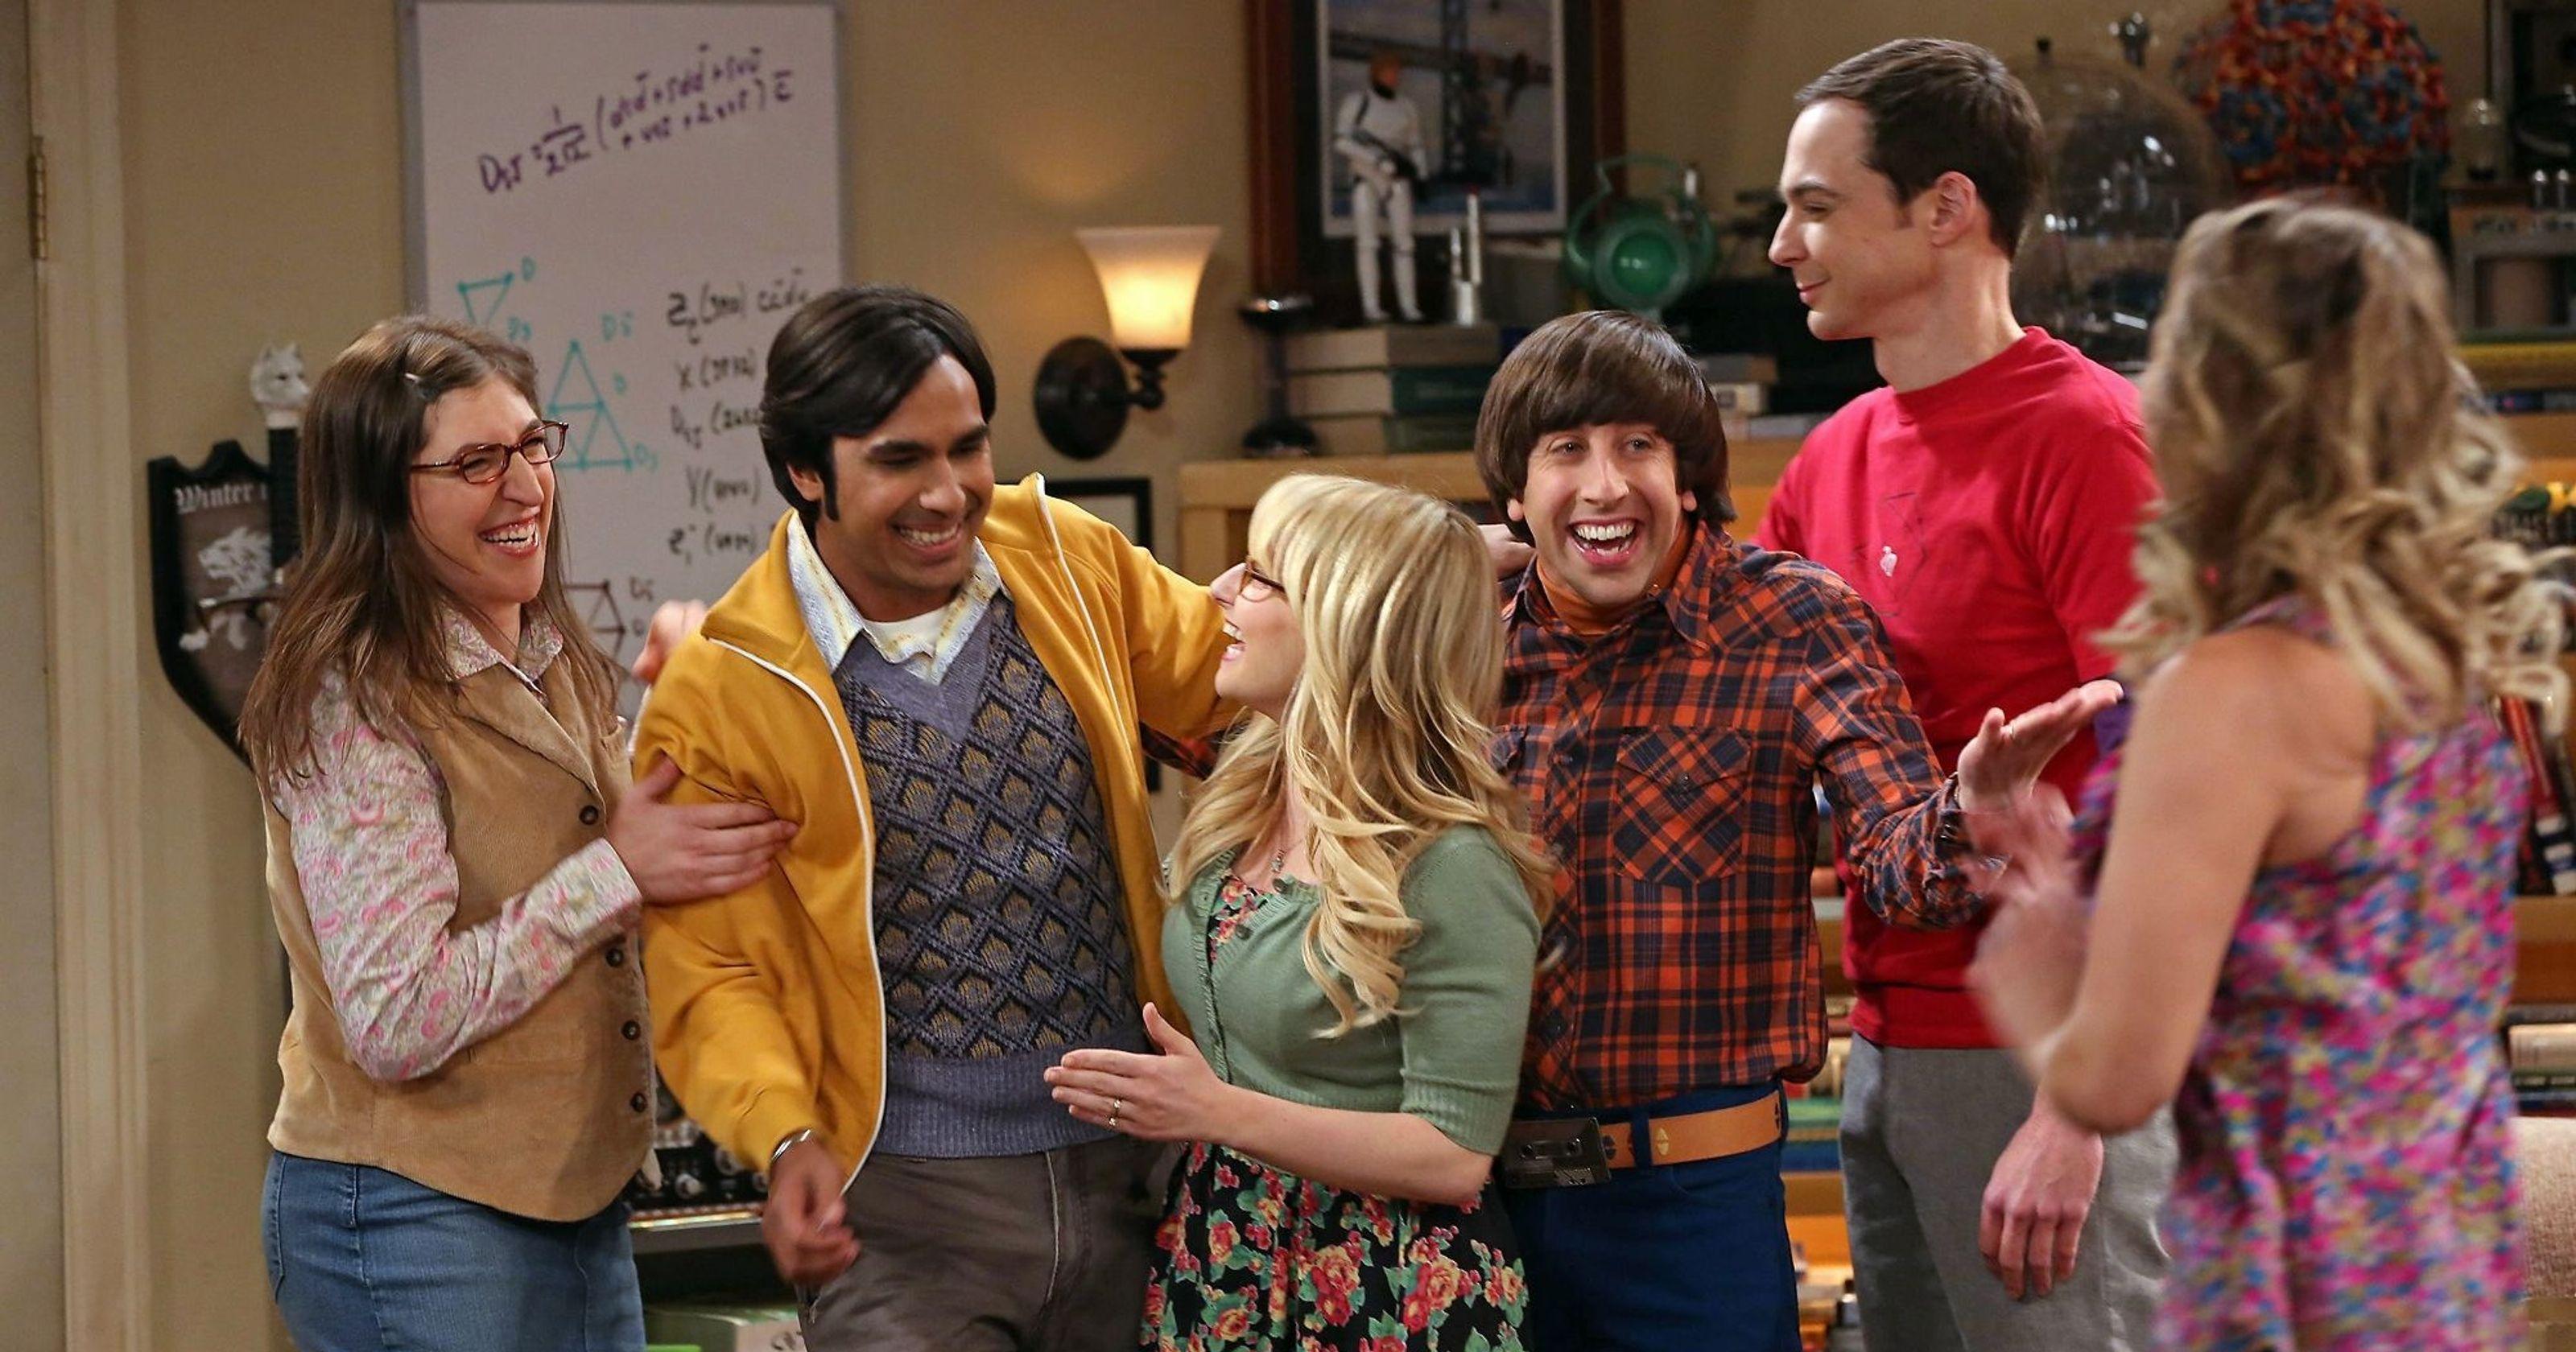 The Big Bang Theory' will end after Season 12 in May 2019